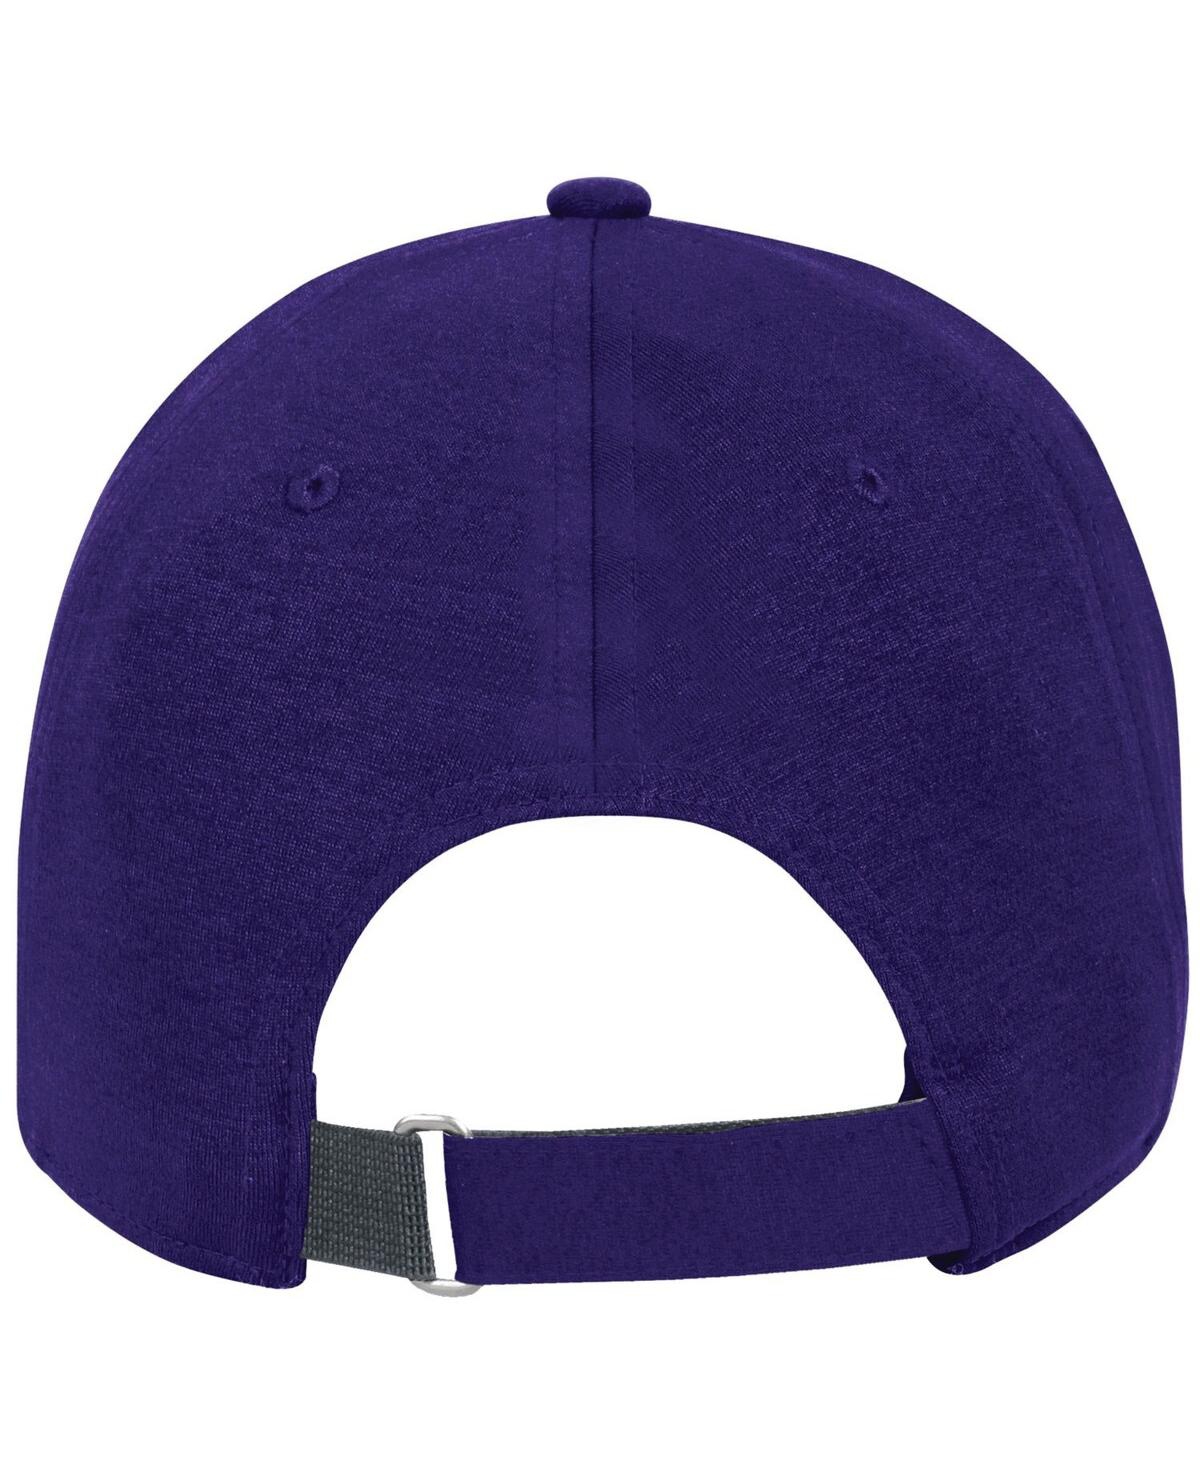 Shop Under Armour Men's  Purple Northwestern Wildcats Ireland Adjustable Hat